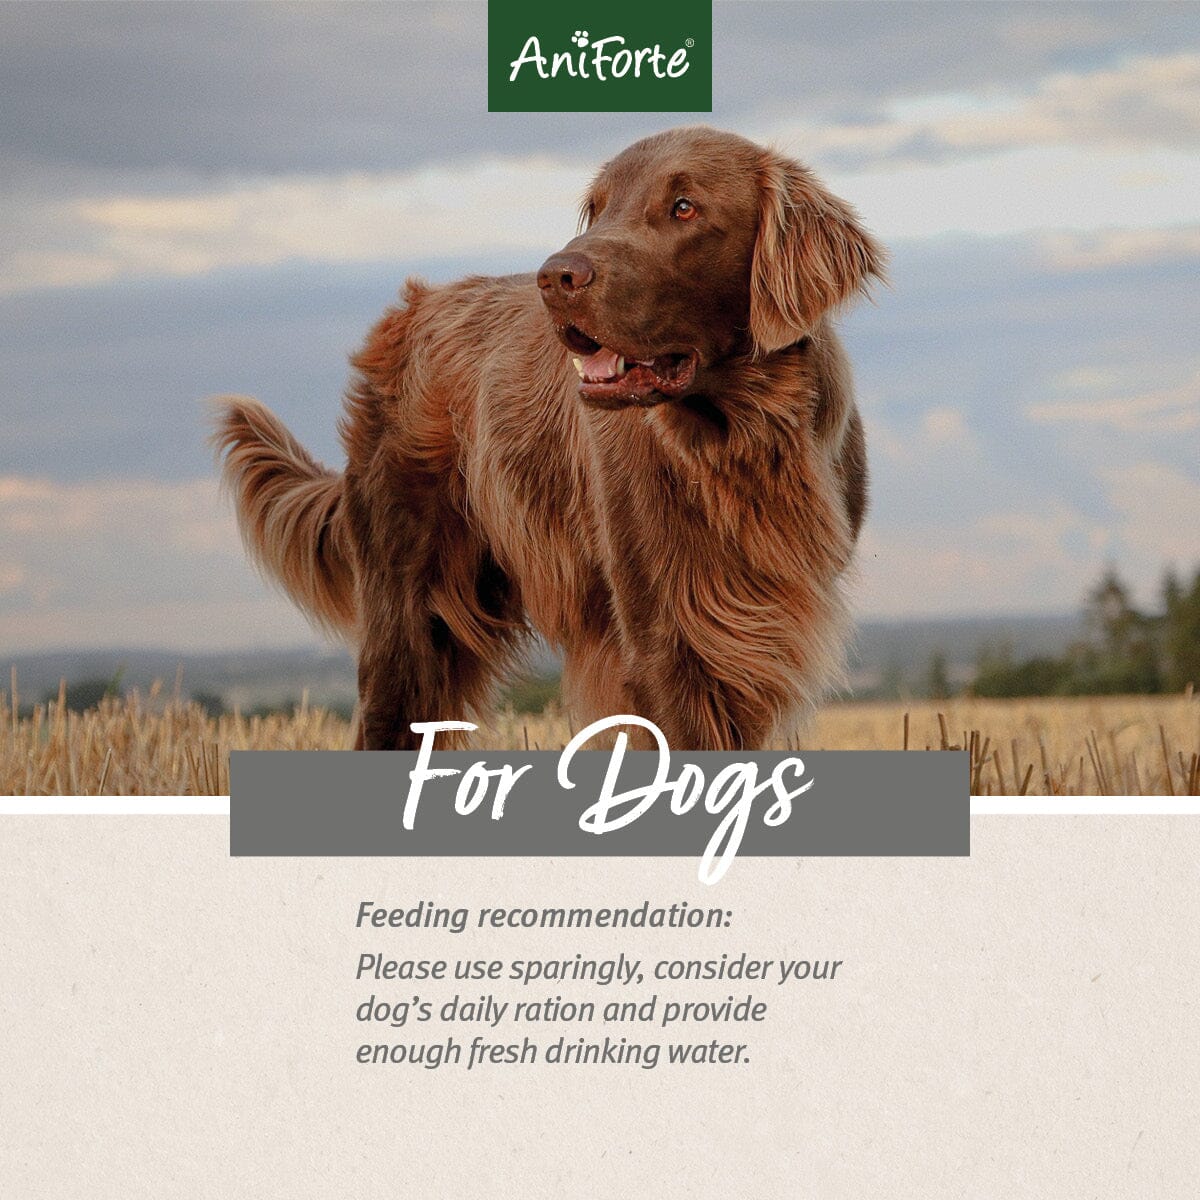 Natural Dog Snacks with Chicken - 150g - AniForte UK